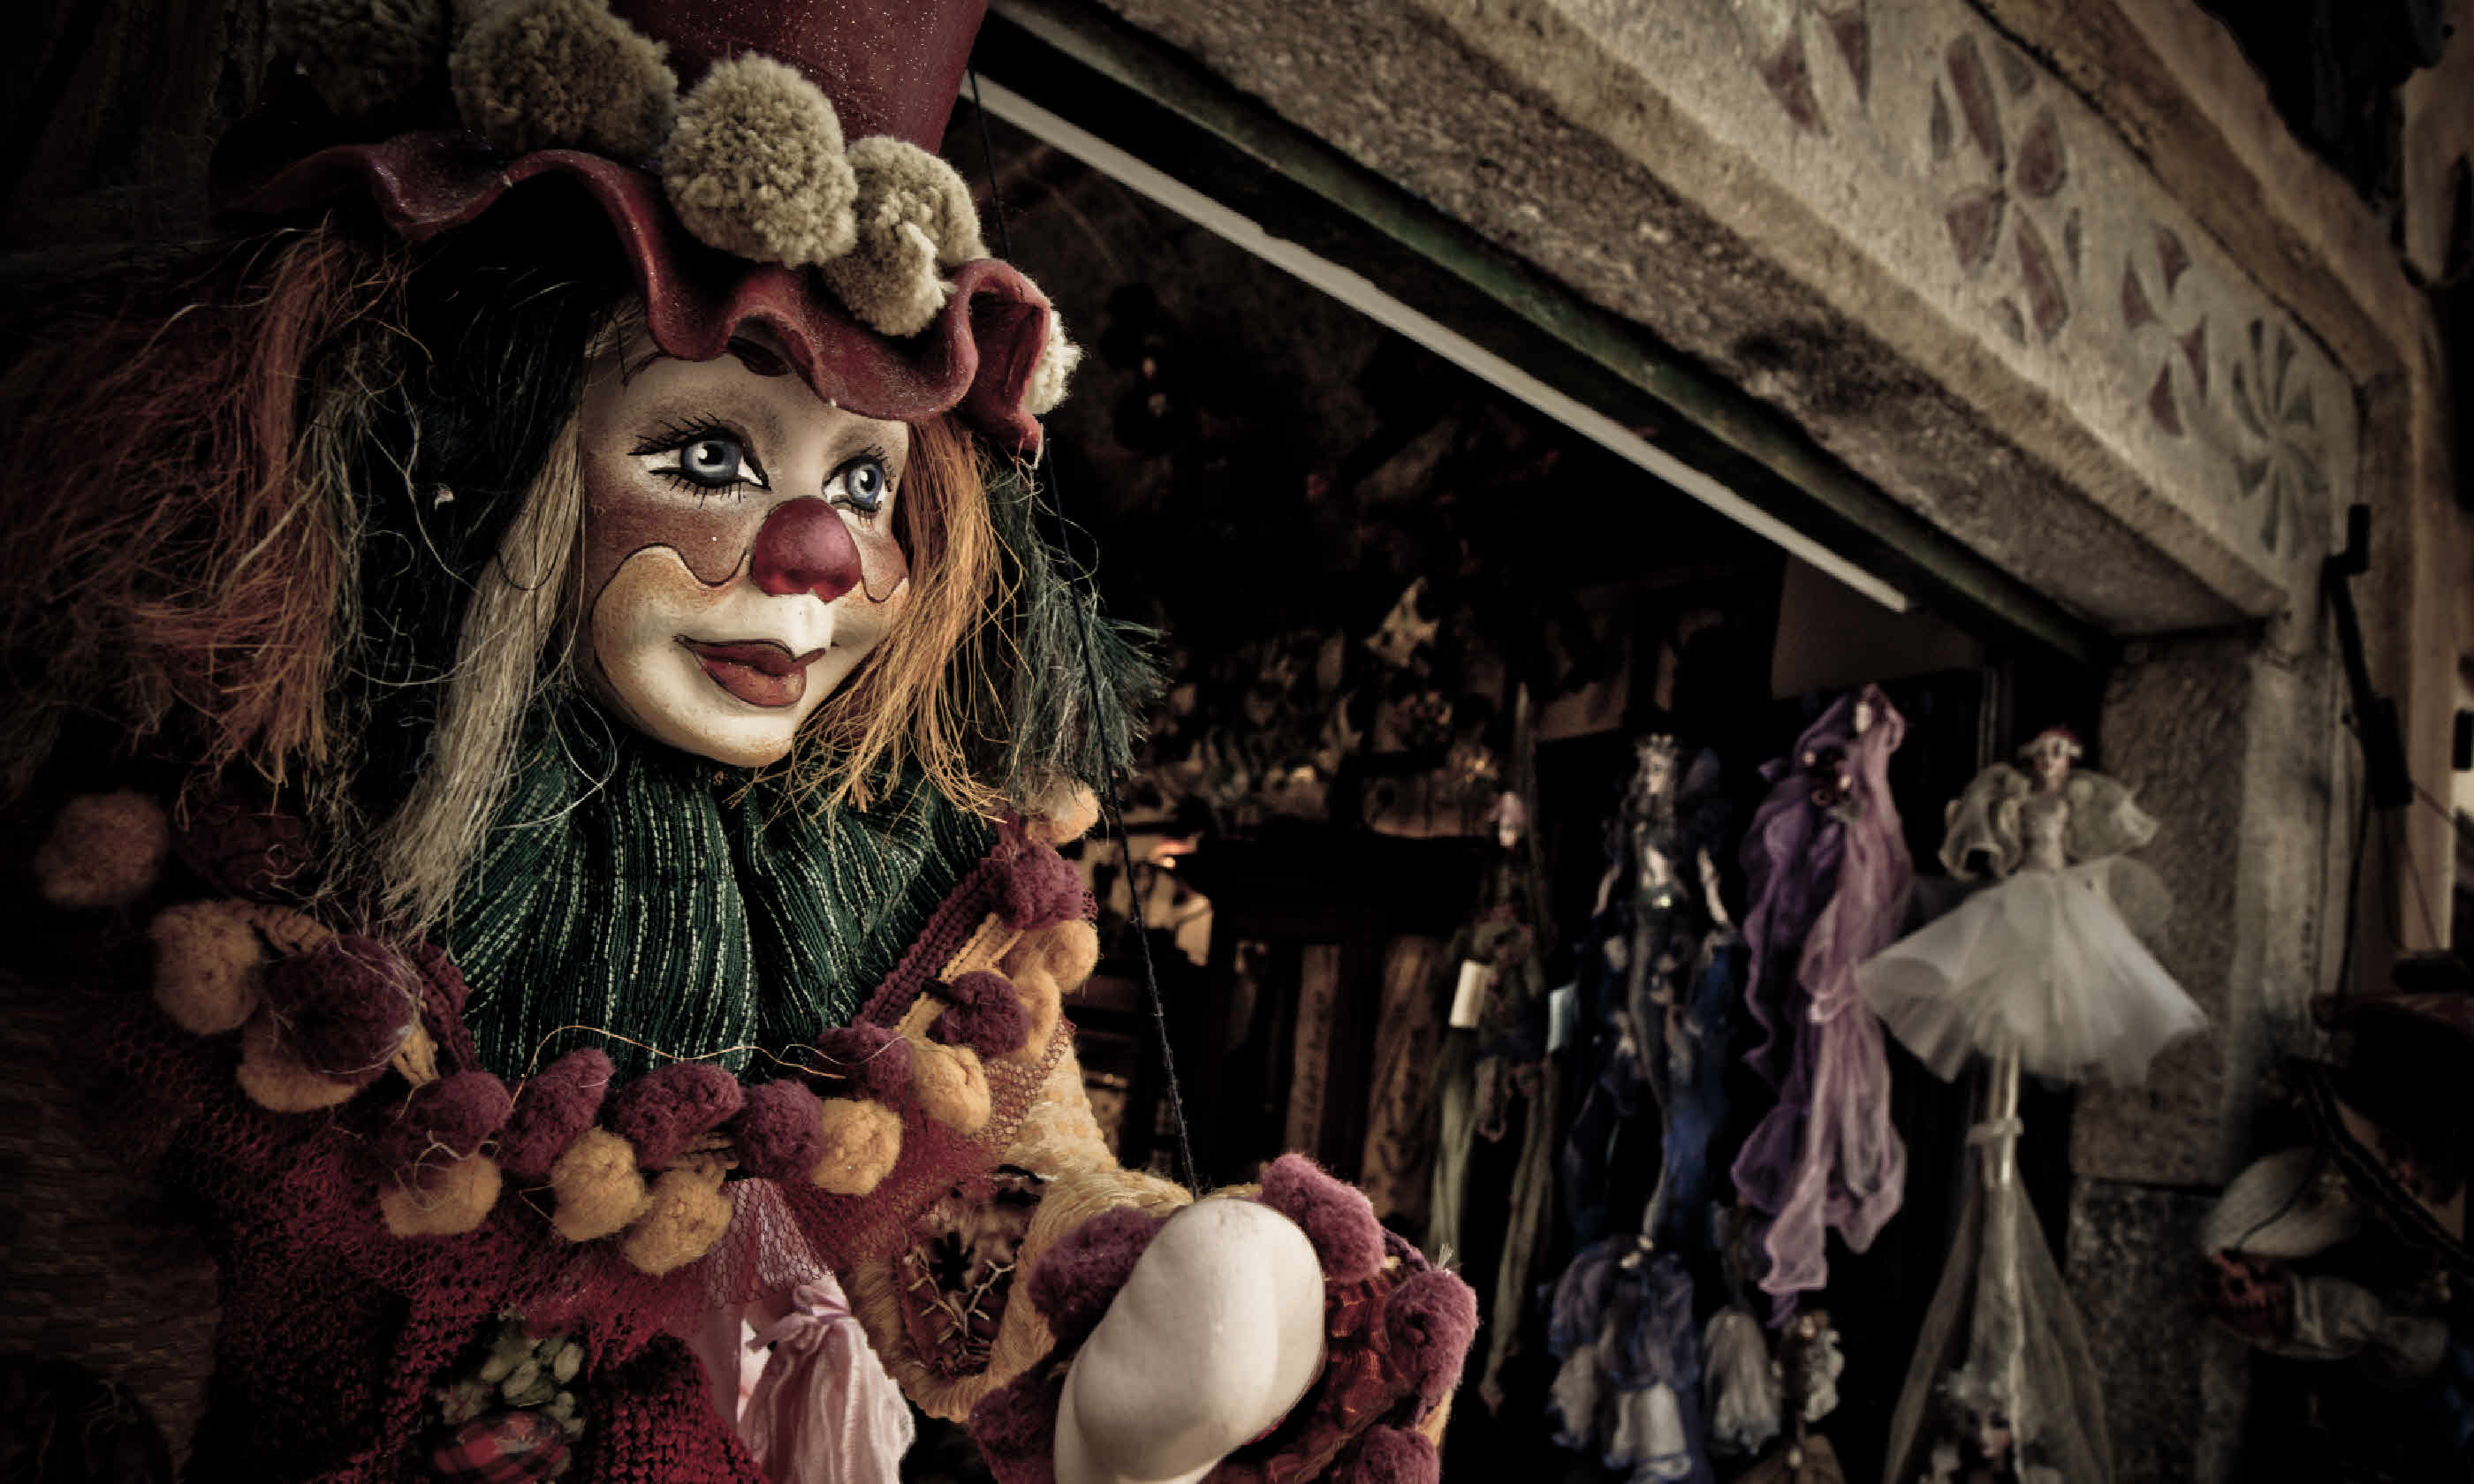 Clown Marionette (Shutterstock: see credit below)